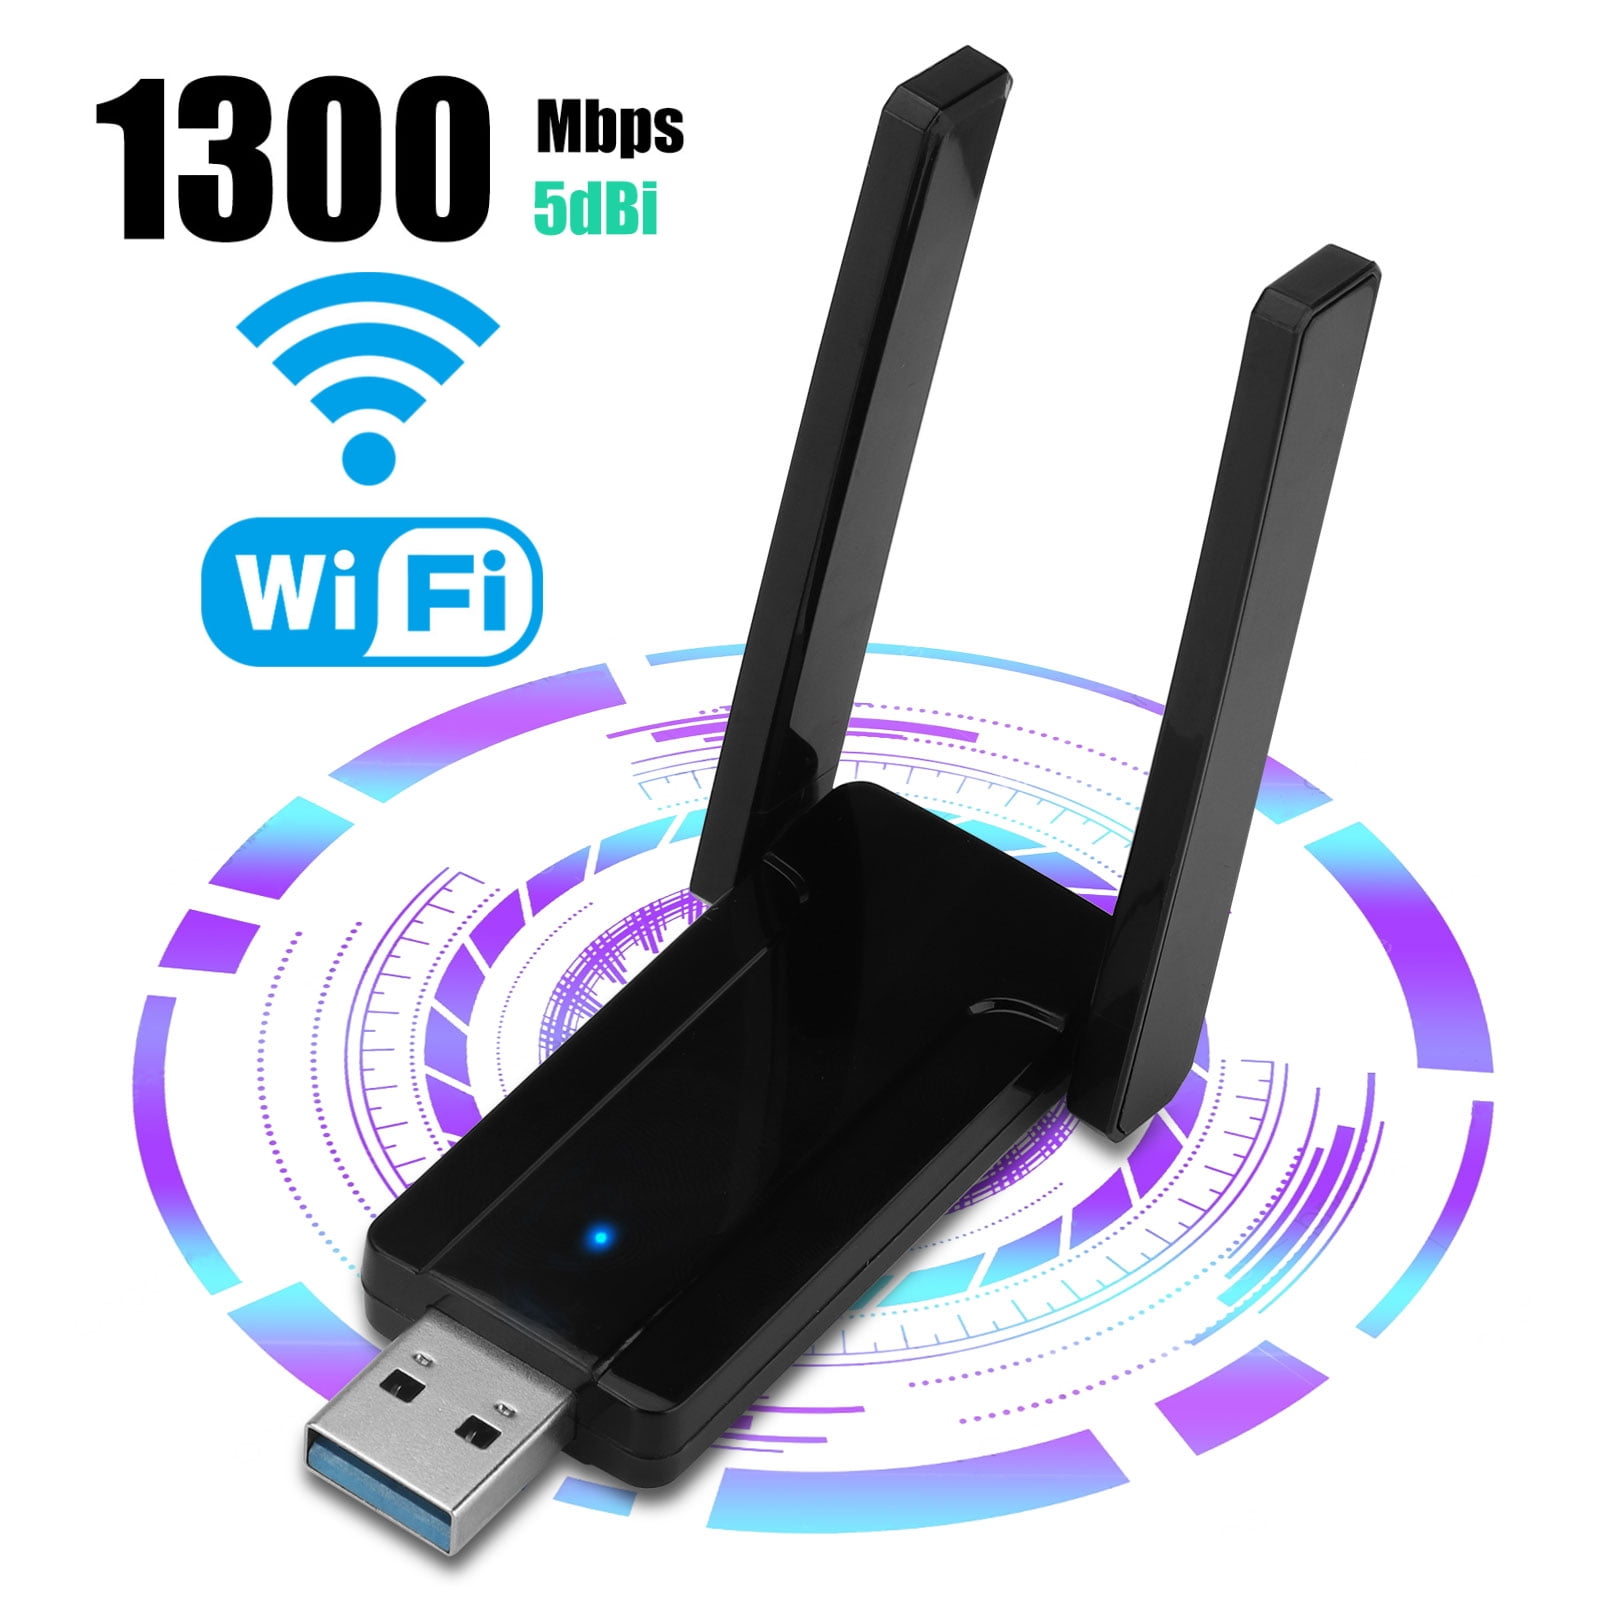 USB WiFi Adapter for PC, AC USB 3.0 Wireless Network Dongle with 2*5dBi Dual 2.4G/5GHz High Gain Antennas for Laptop Desktop Windows 10//8/7/XP/Vista, Linux, Mac OS 10.9-10.15 - Walmart.com